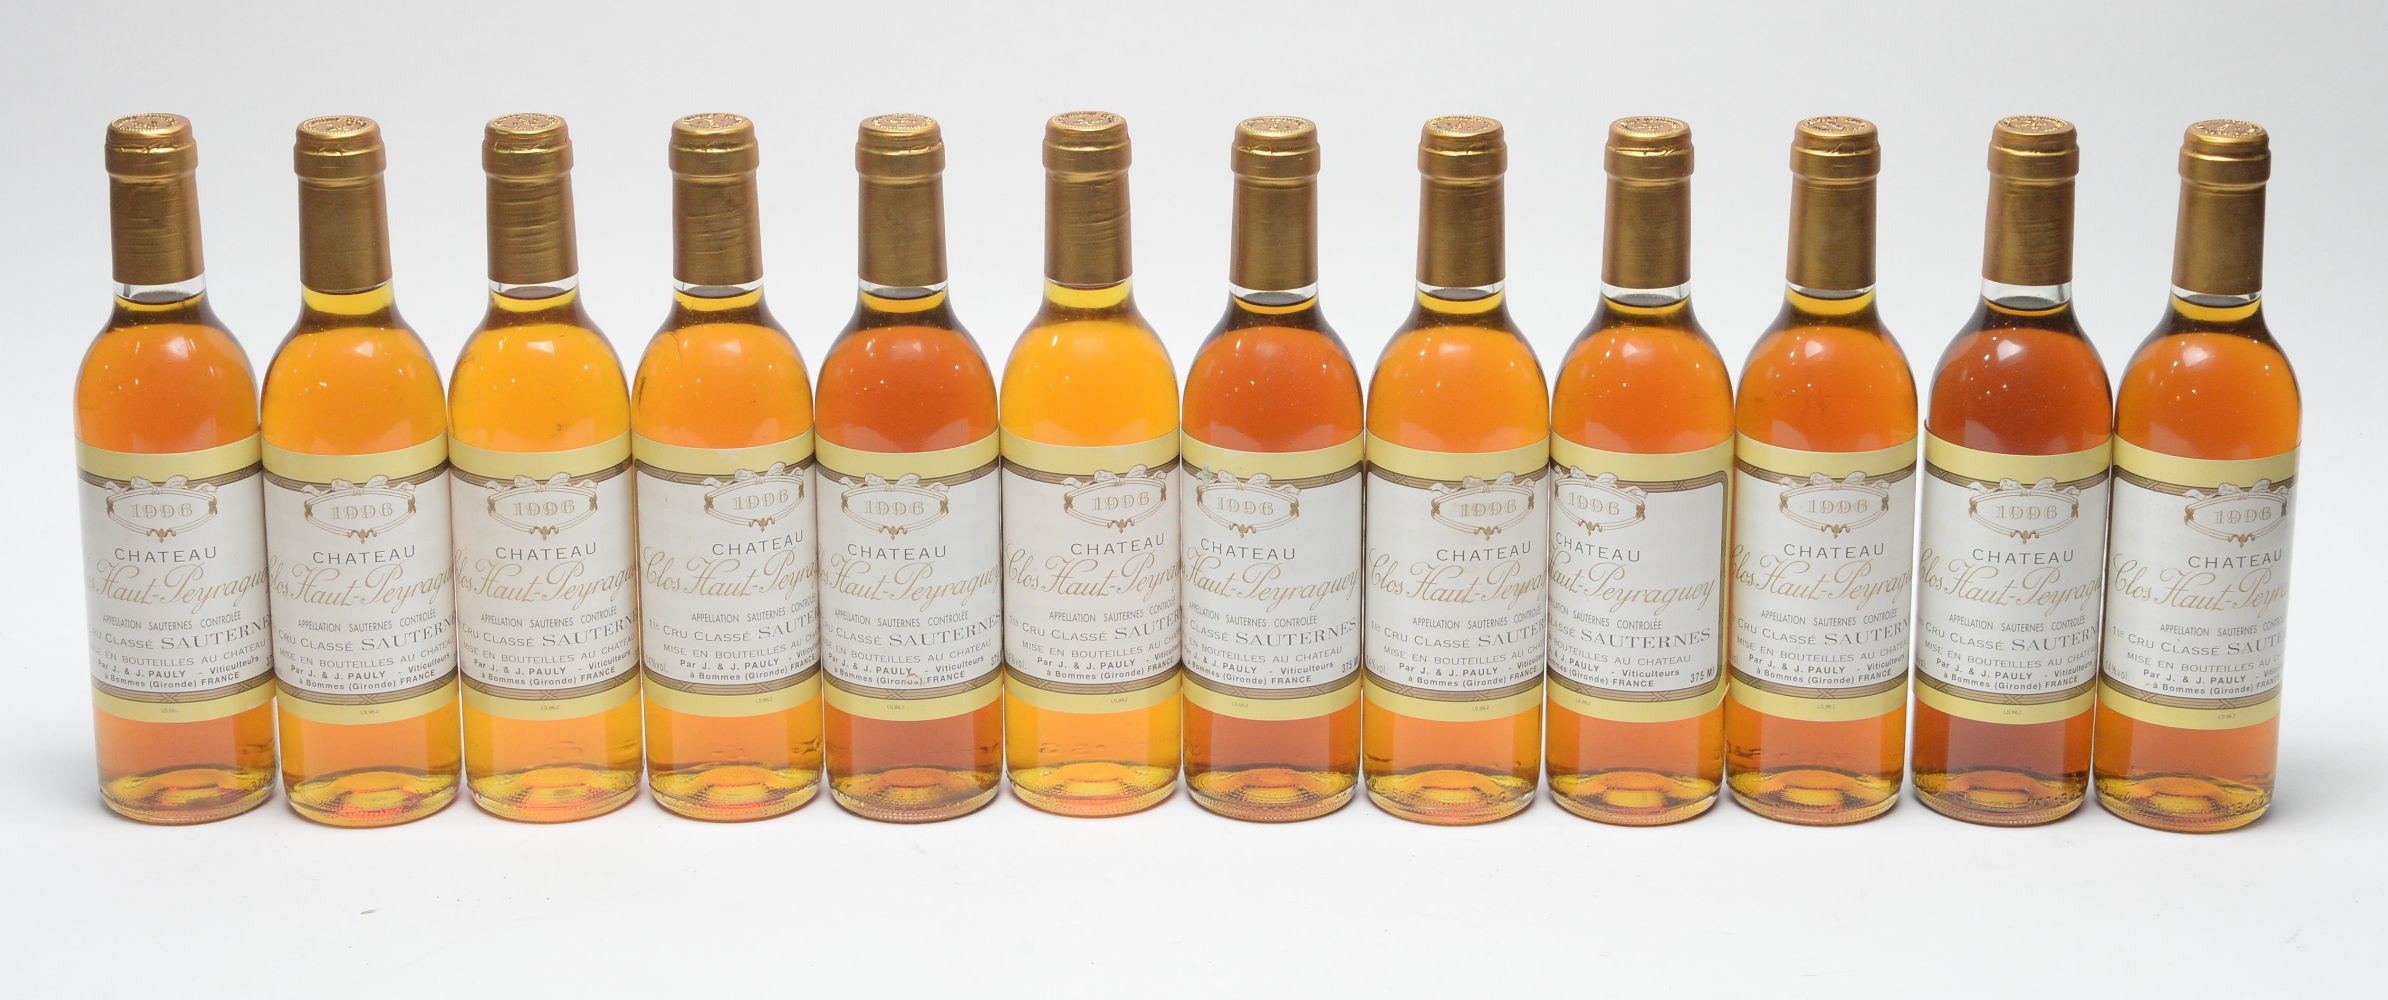 The Fine Wines, Whisky & Cognac Auction